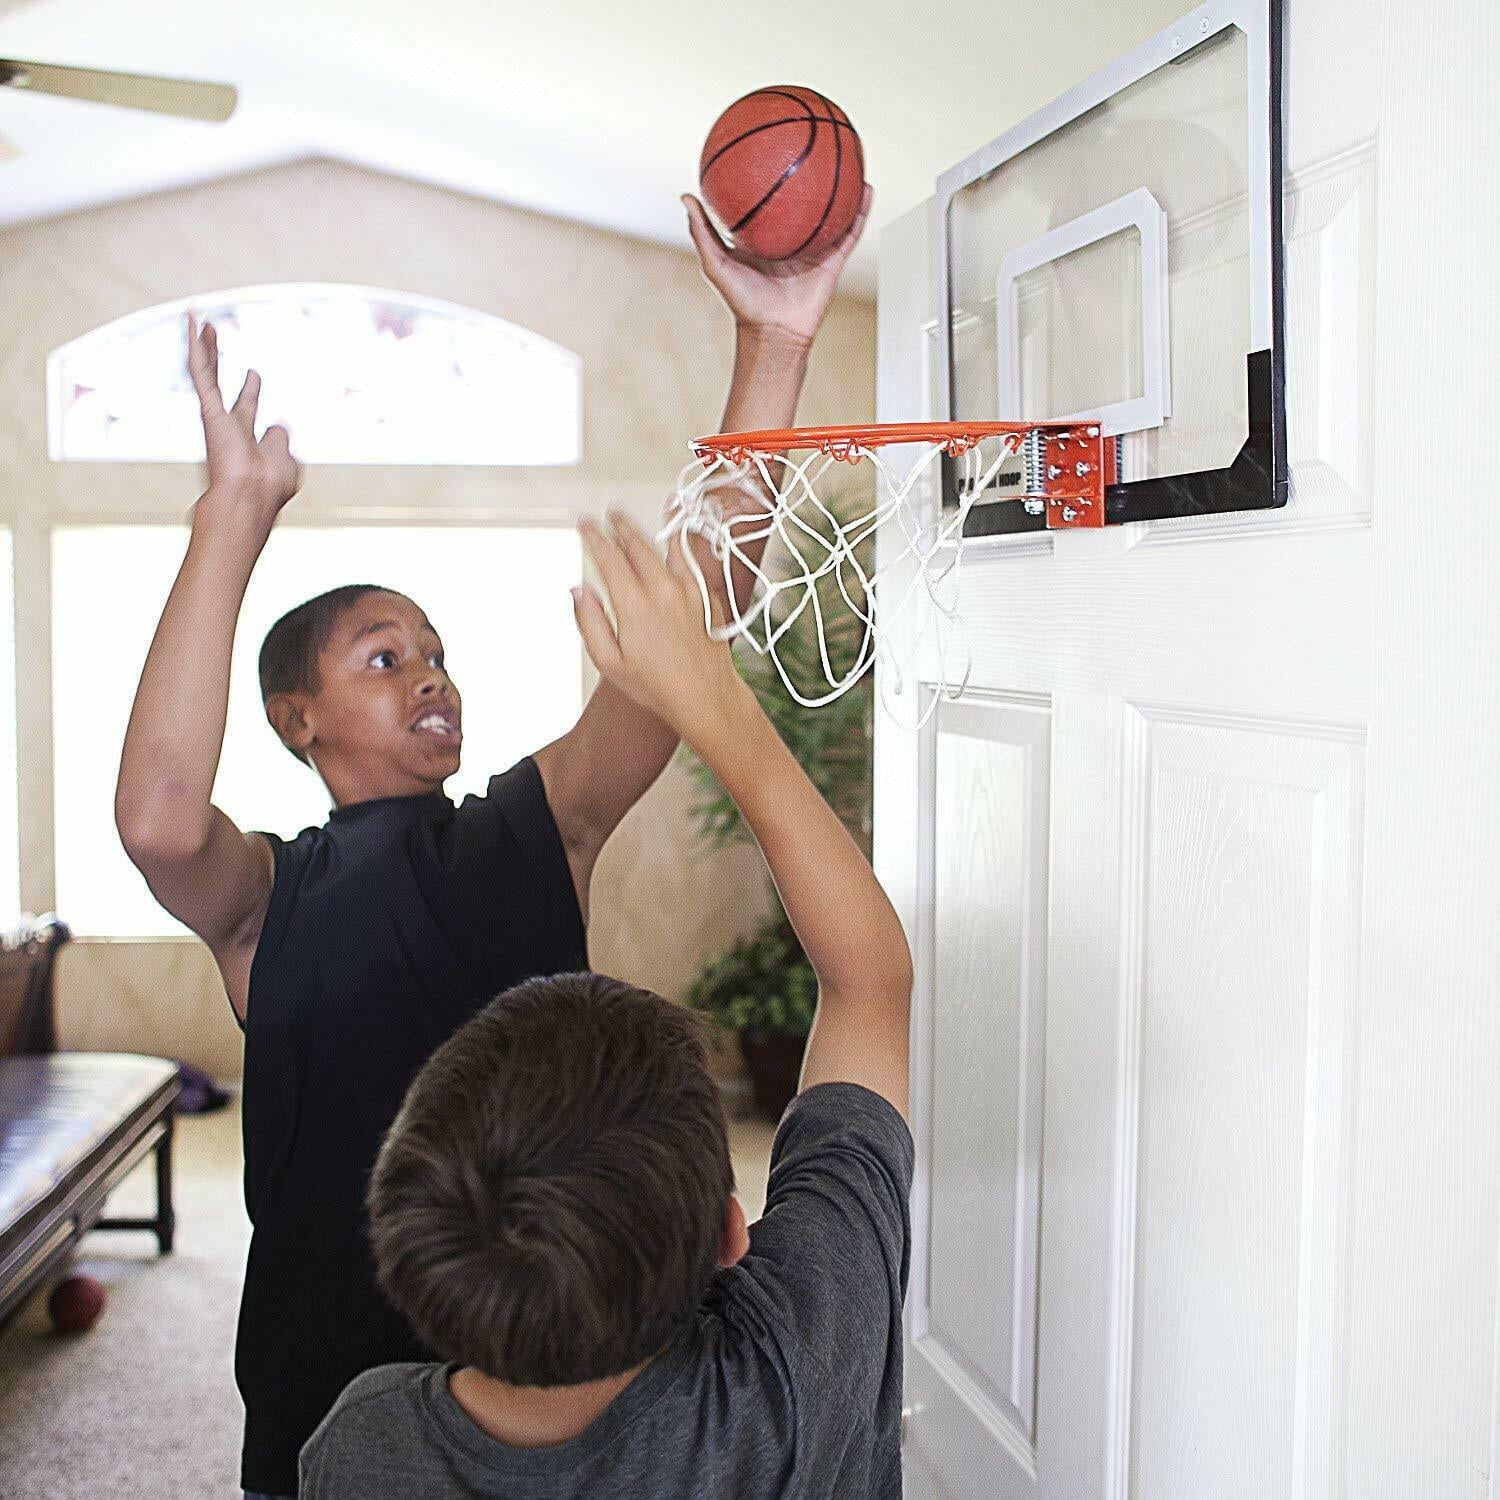 Mini Basketball Hoop System w/Ball Home Office Wall Basketball Net Goal Door Use 